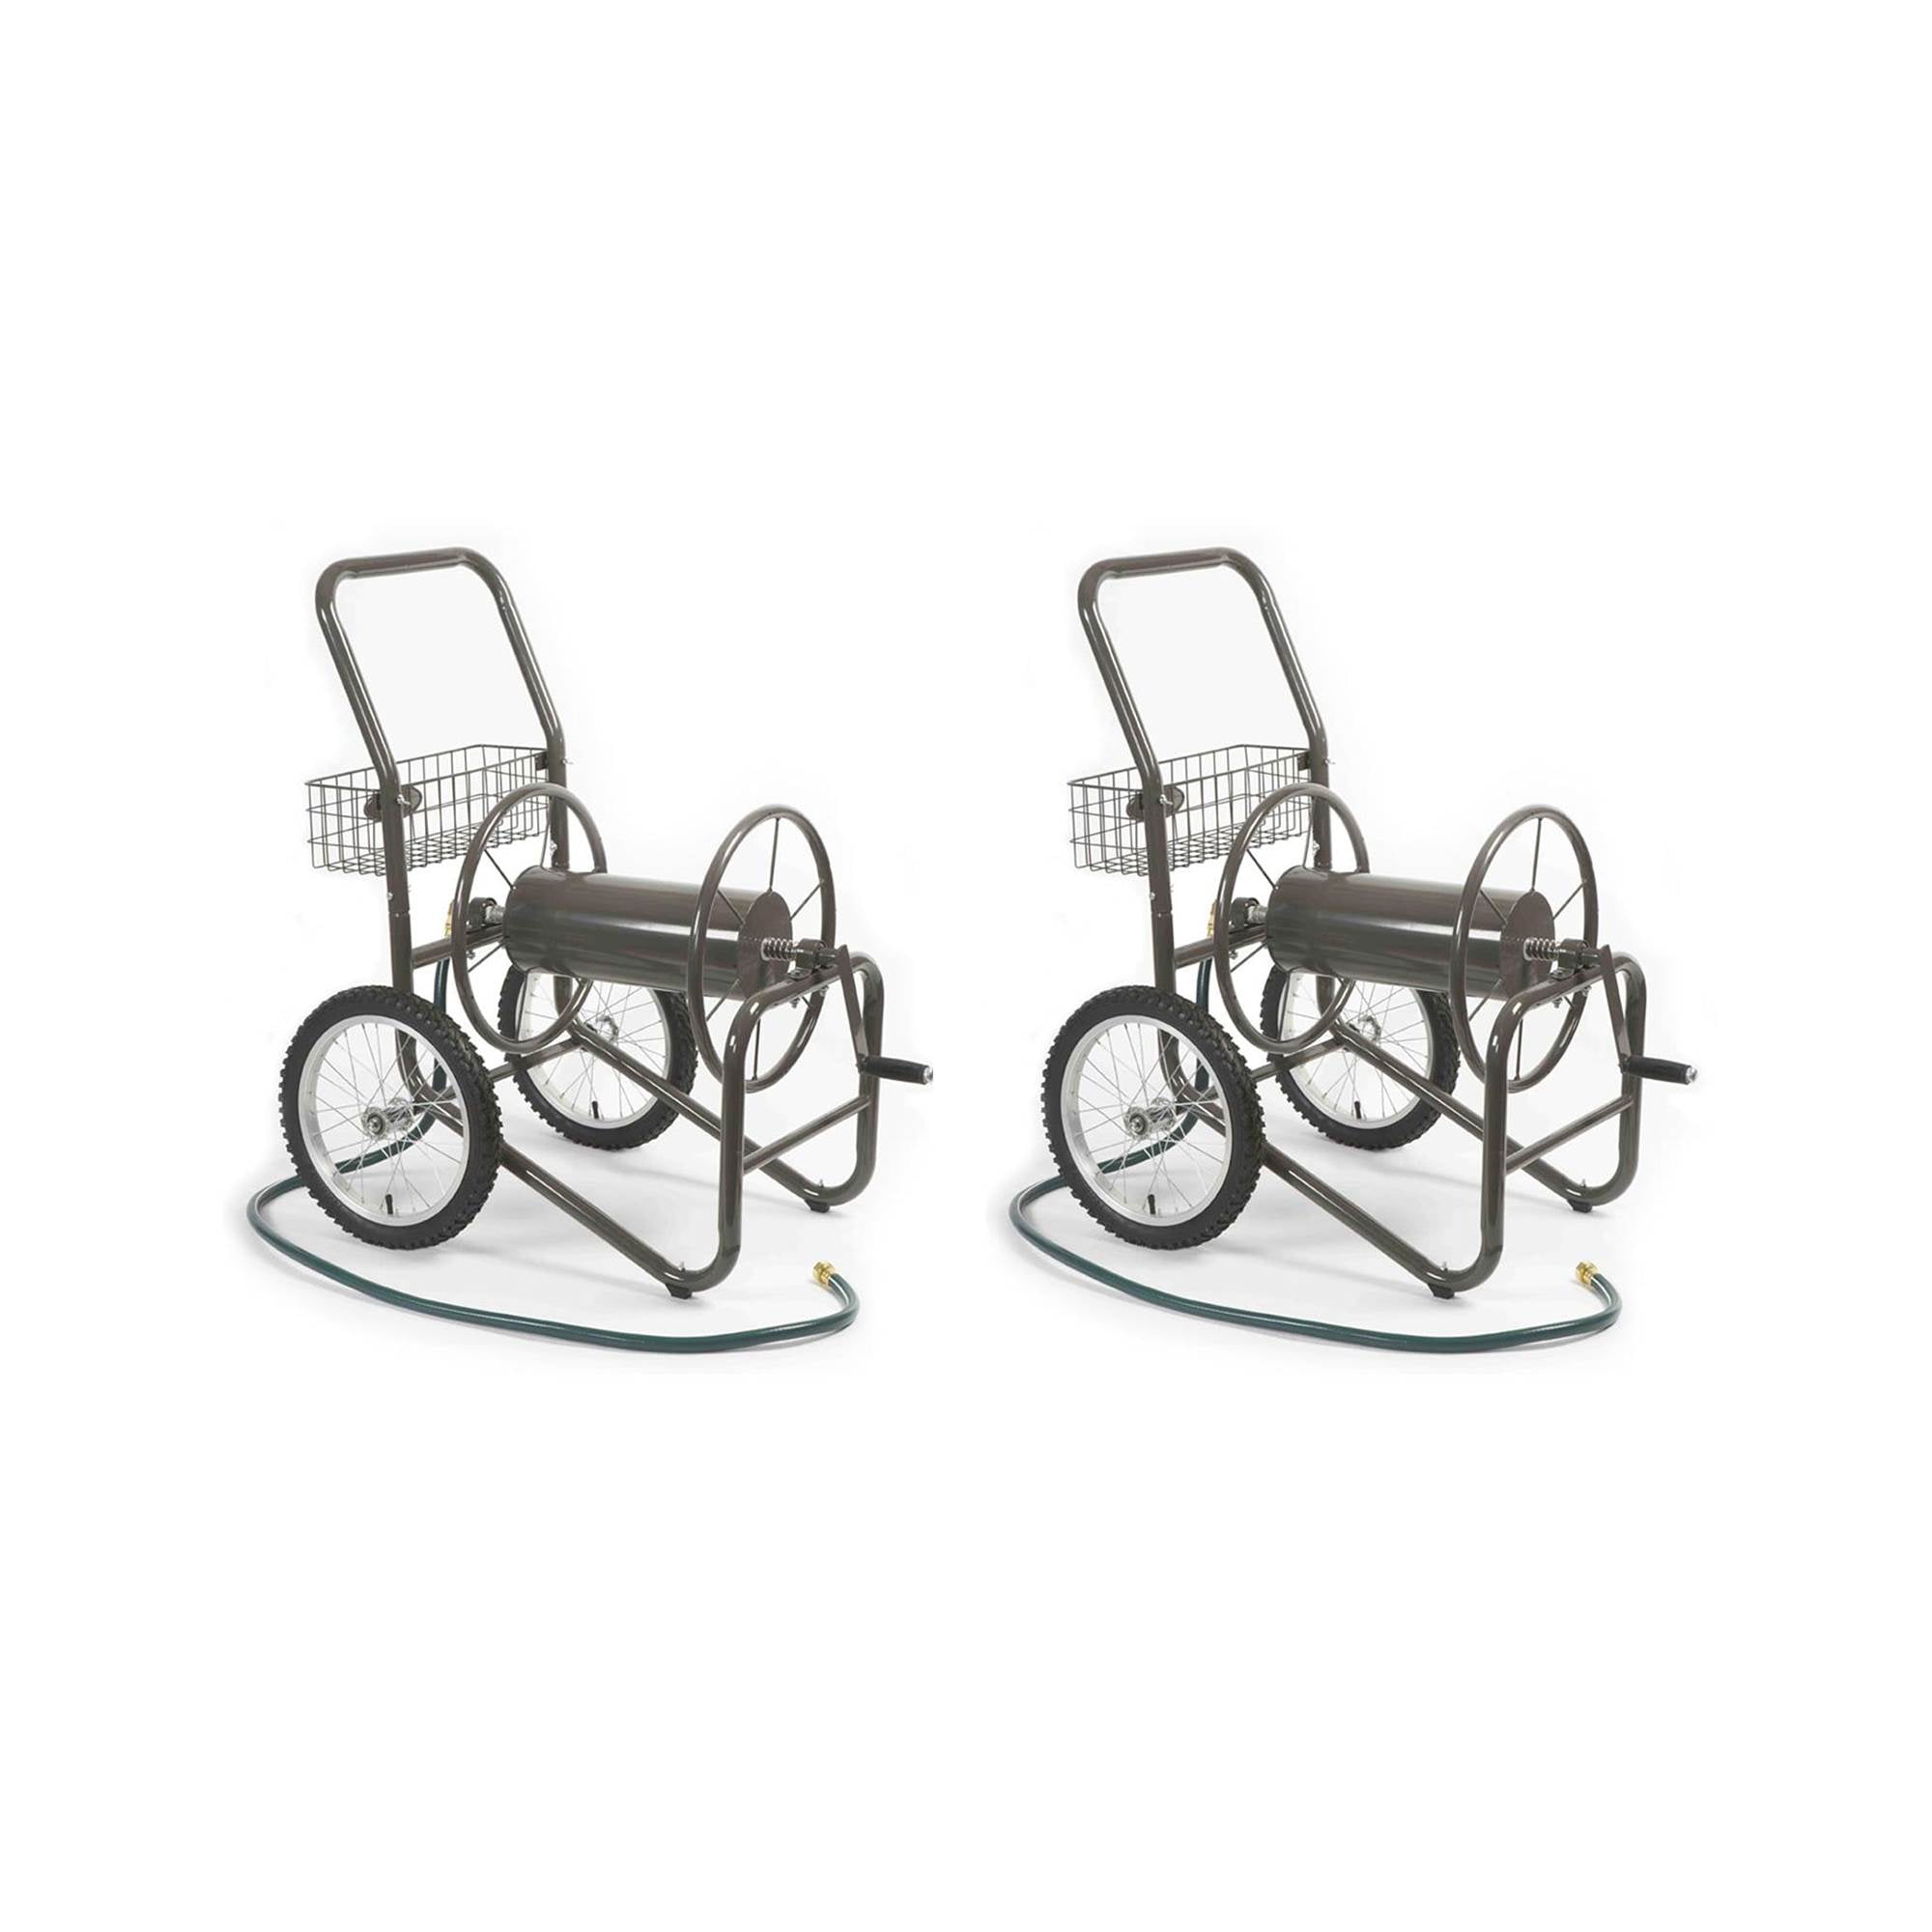 Details about   Liberty Garden 2 Wheel Steel Frame Water Hose Reel Basket Cart 2 Pack Bronze 